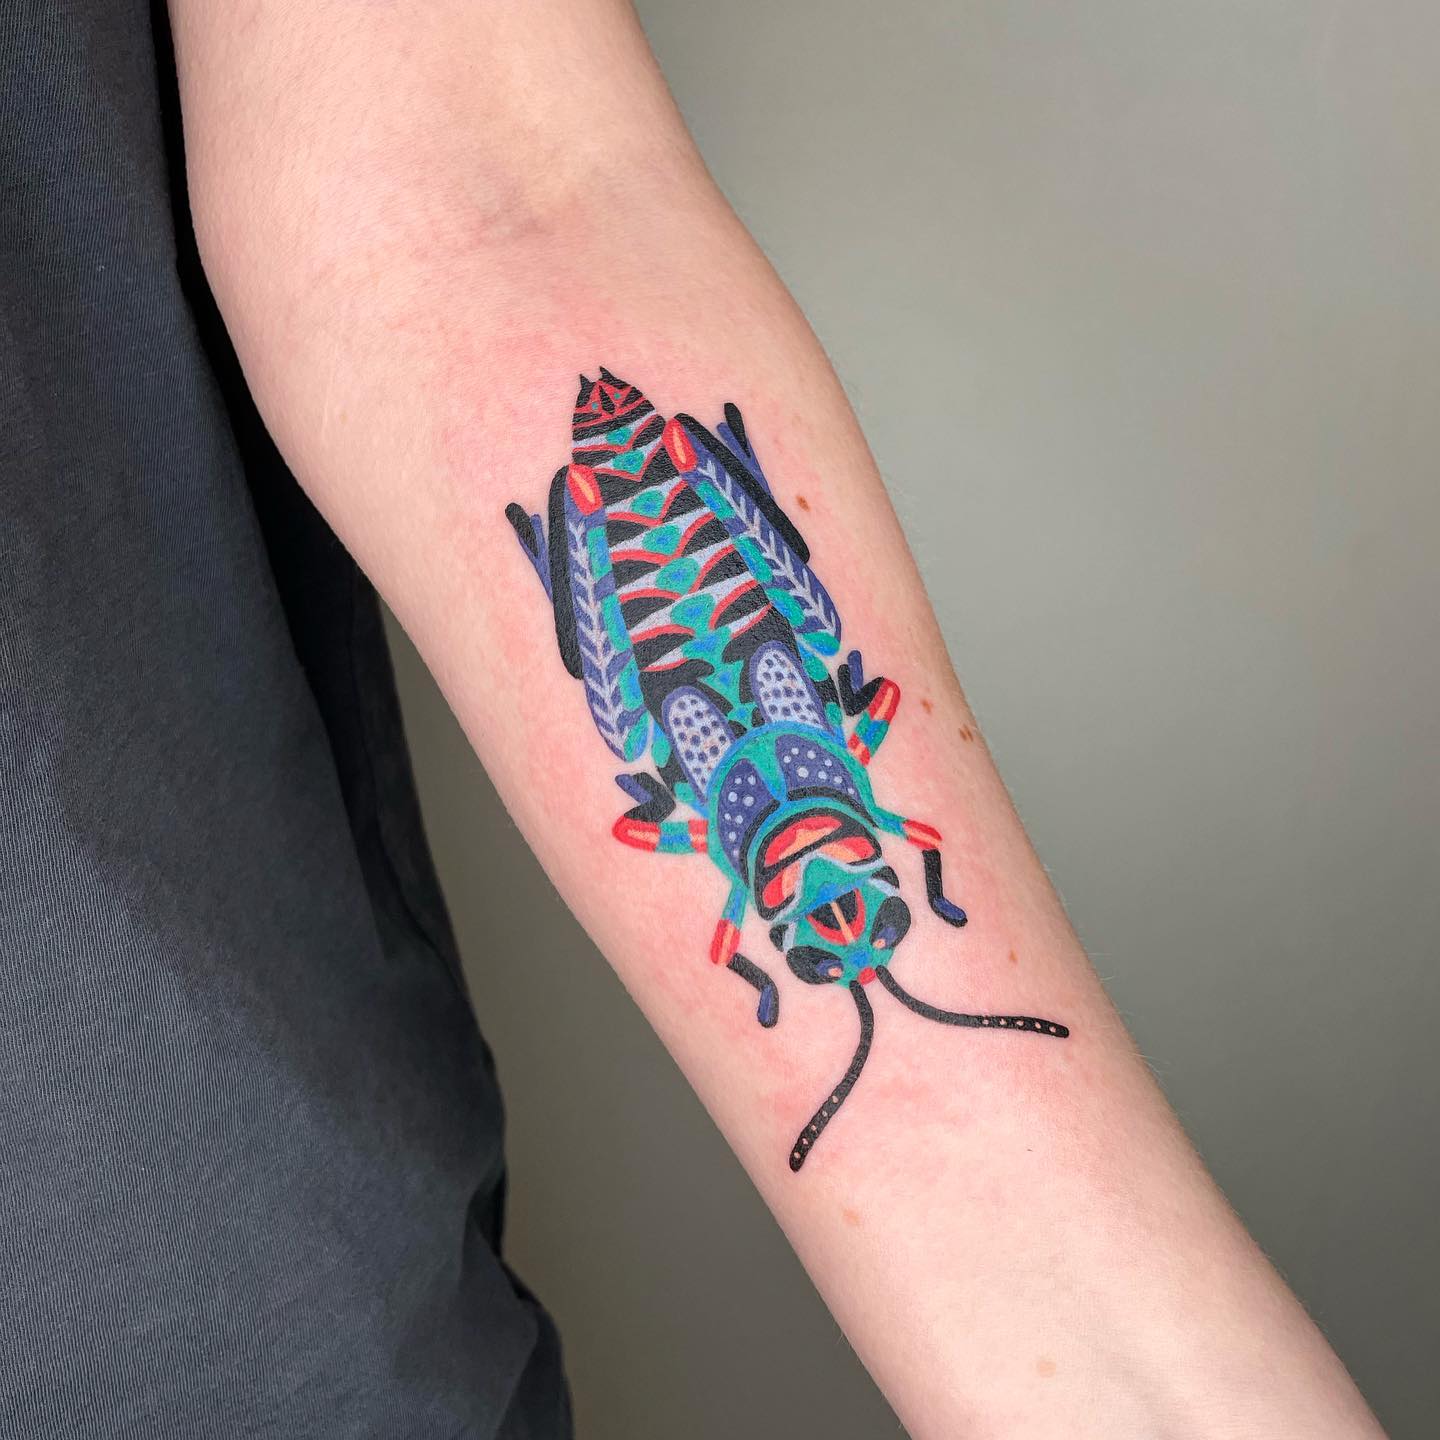 Grasshopper tattoo on arm by laurenblairart